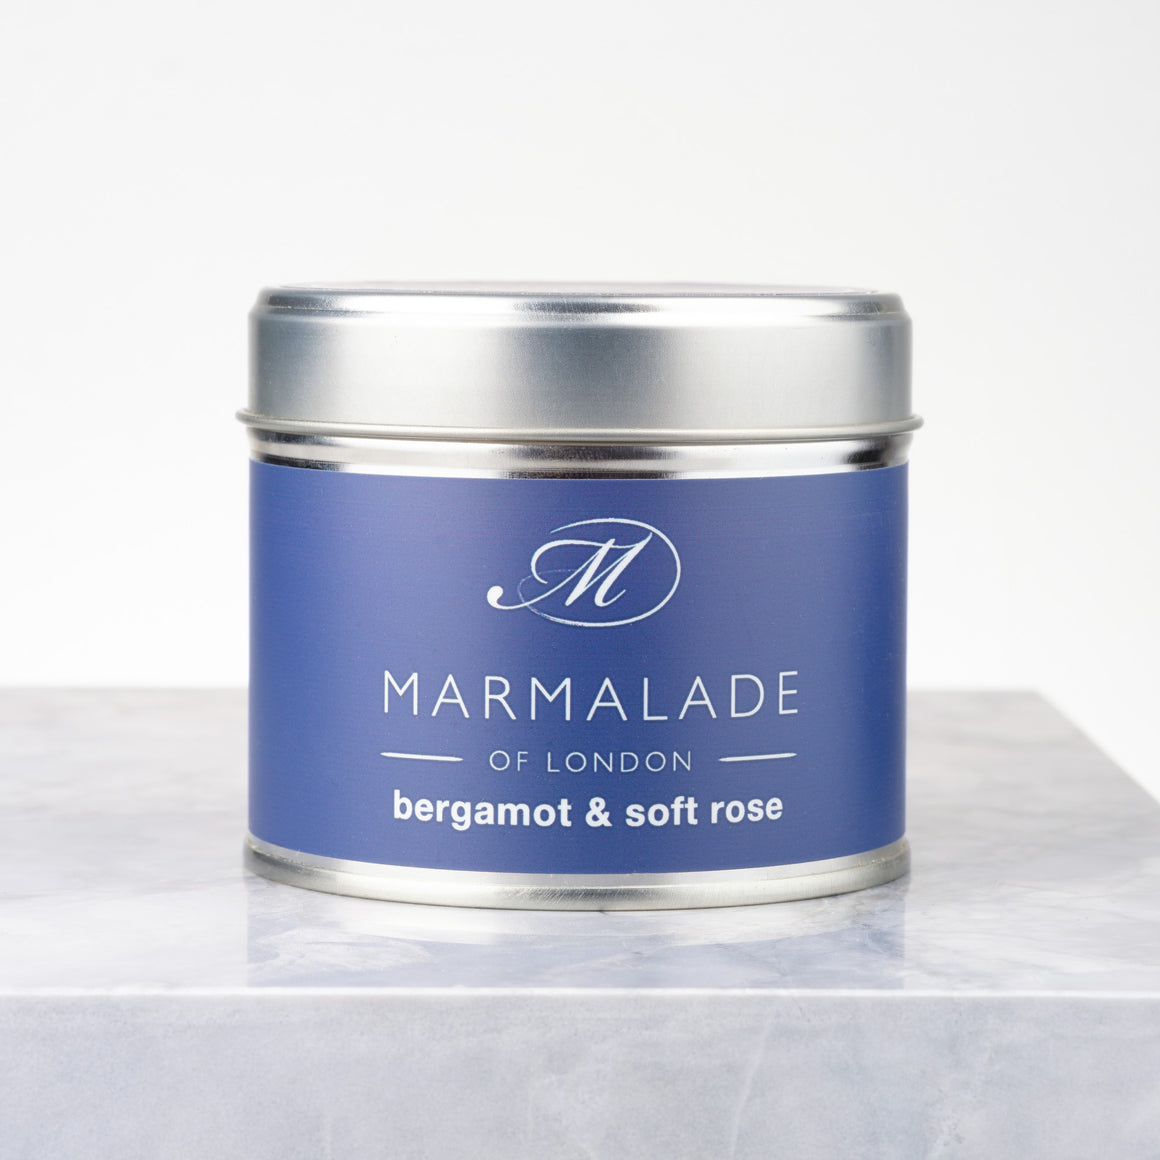 Marmalade of London Bergamot & Soft Rose Medium Tin with blue packaging